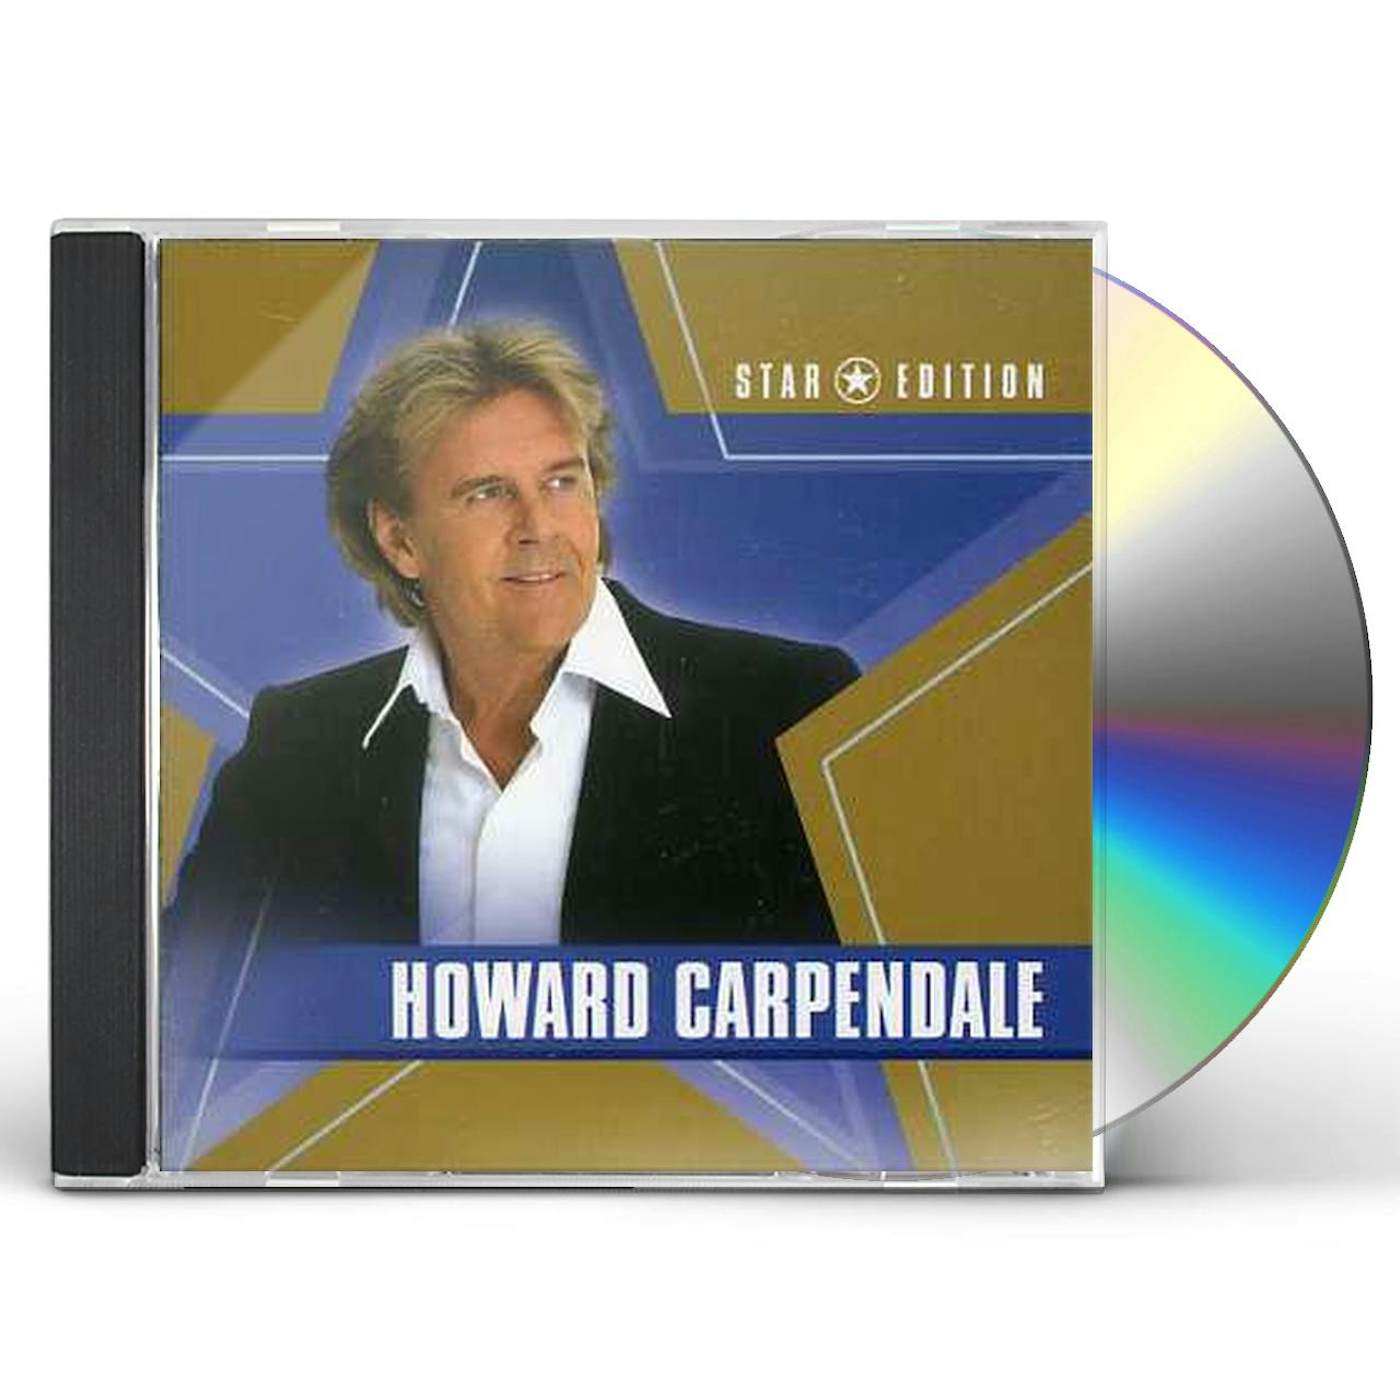 Howard Carpendale STAR EDITION CD